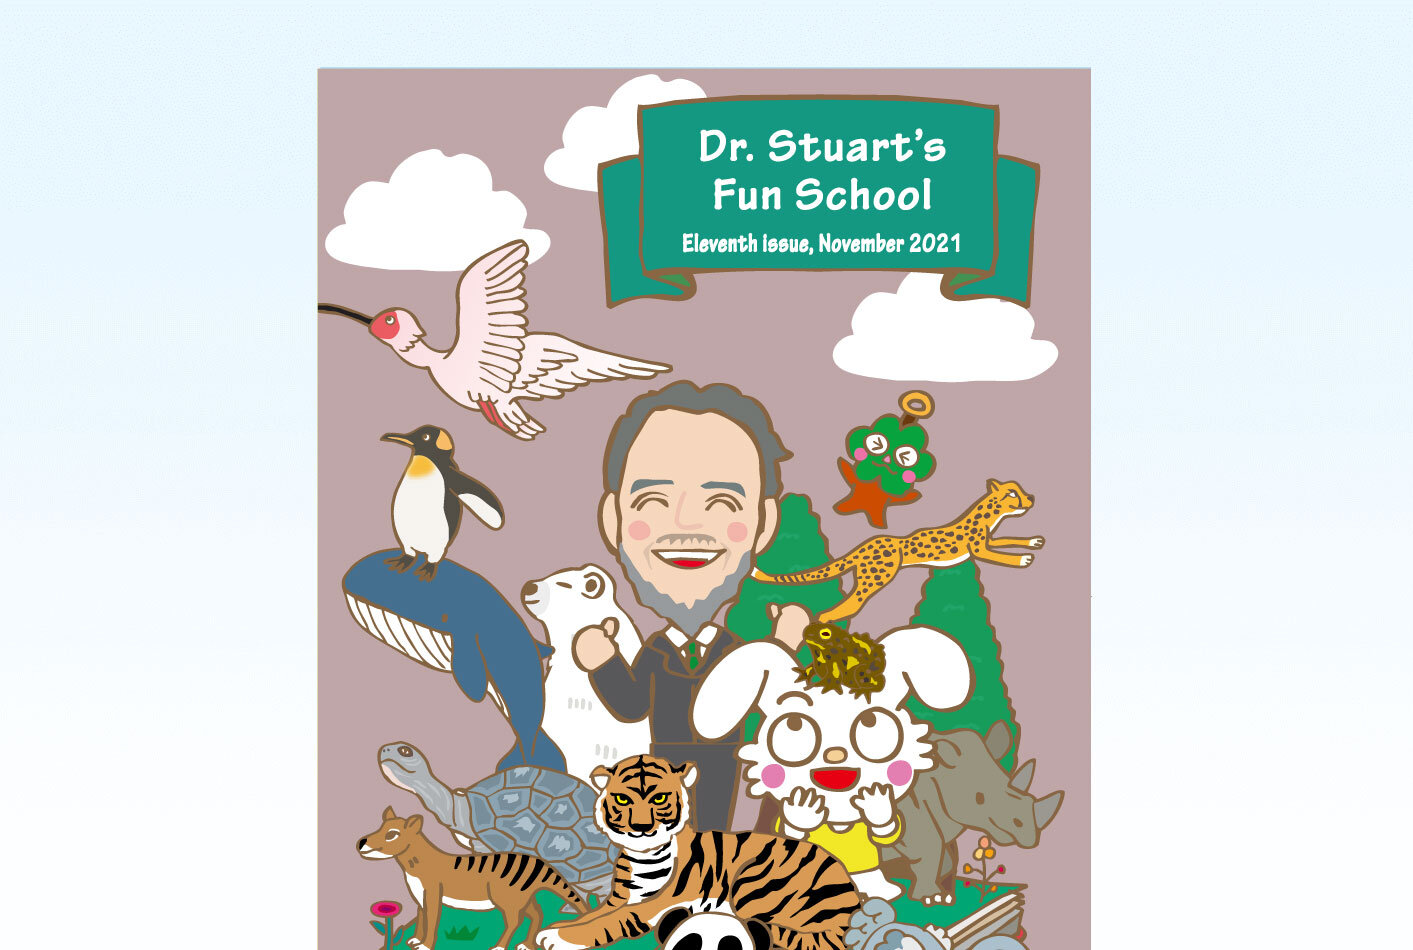 Dr. Stuart's Fun School